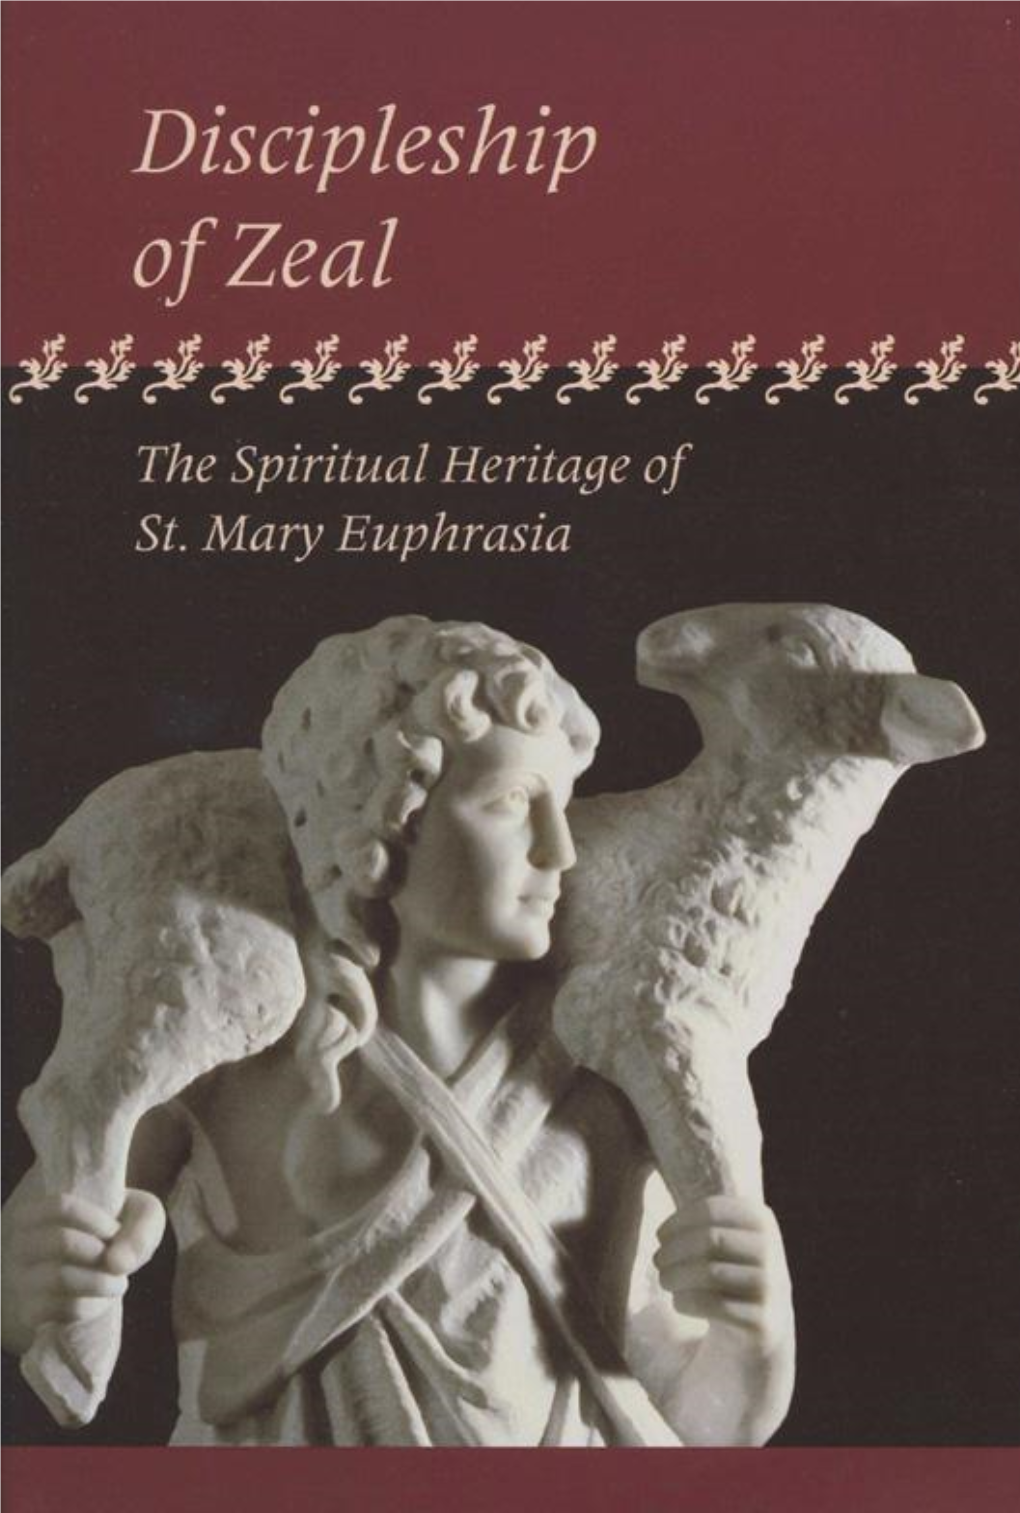 The Spiritual Heritage of St. Mary Euphrasia